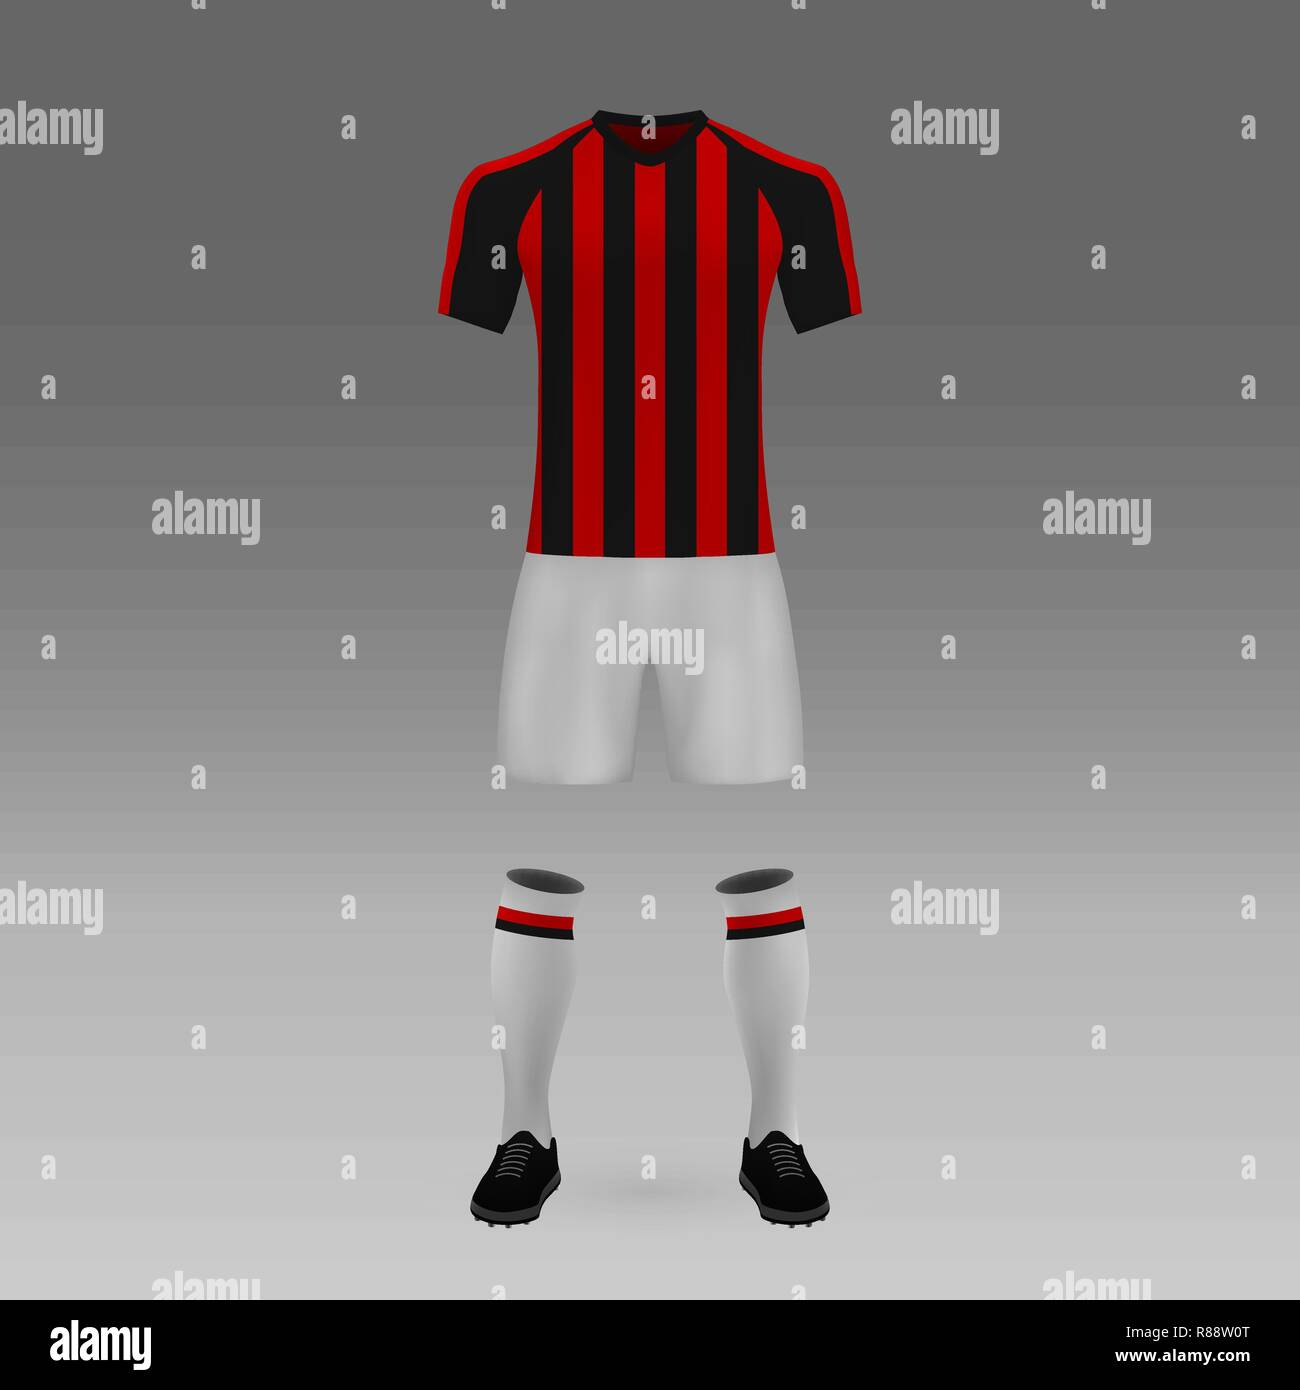 football kit Milan, shirt template for soccer jersey. Vector illustration Stock Vector